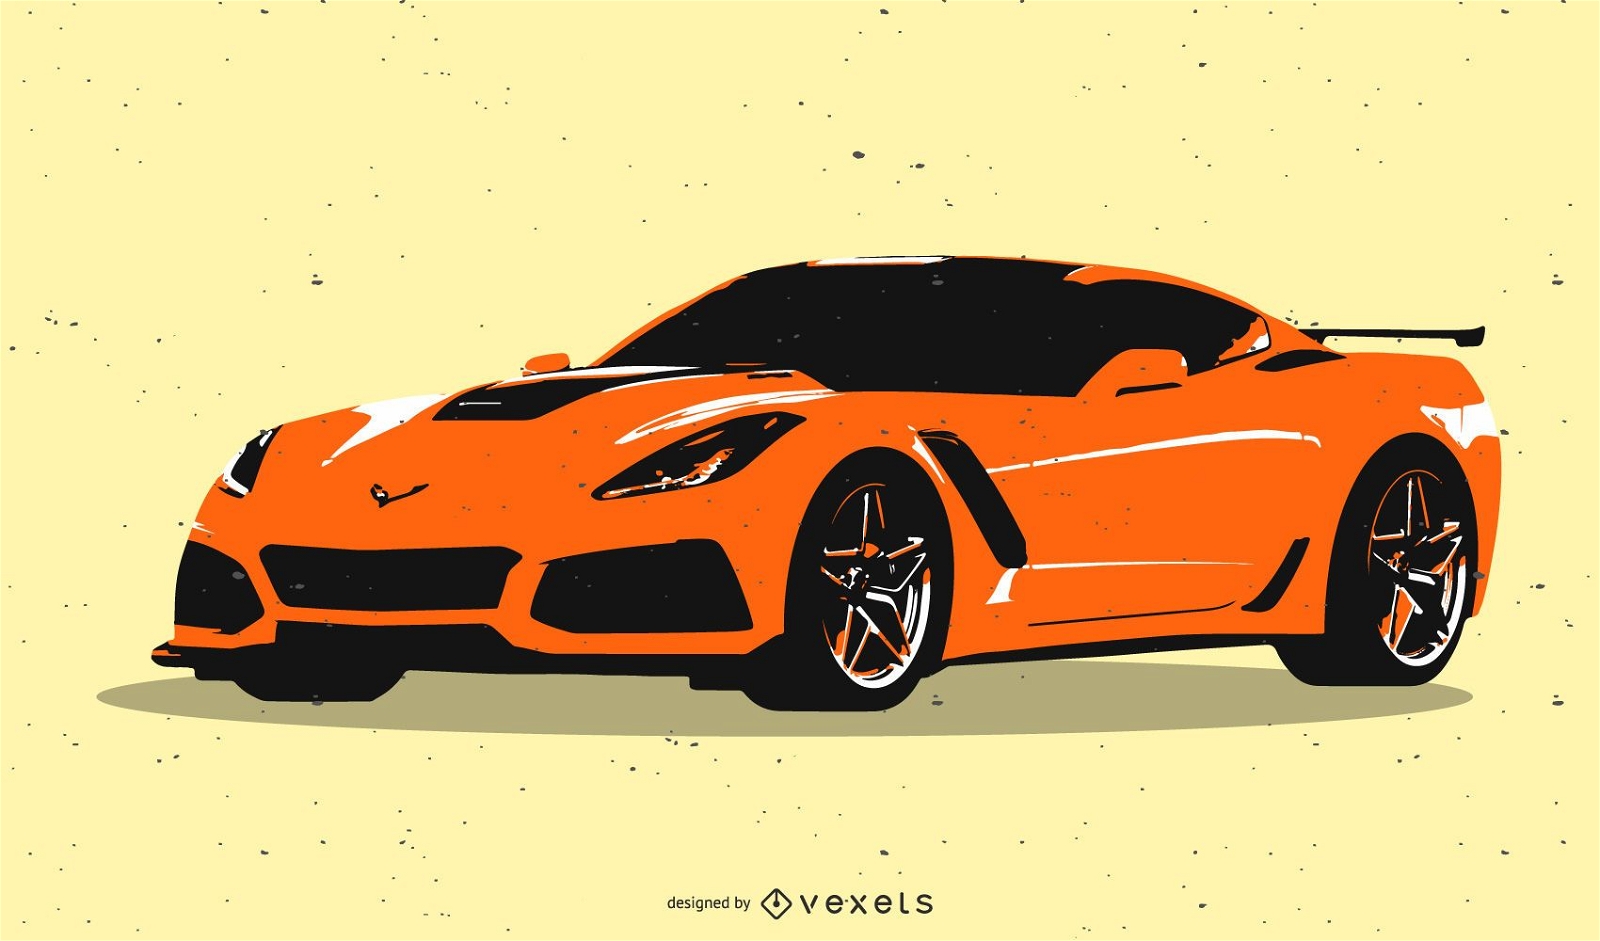 Corvette Zr1 Vector